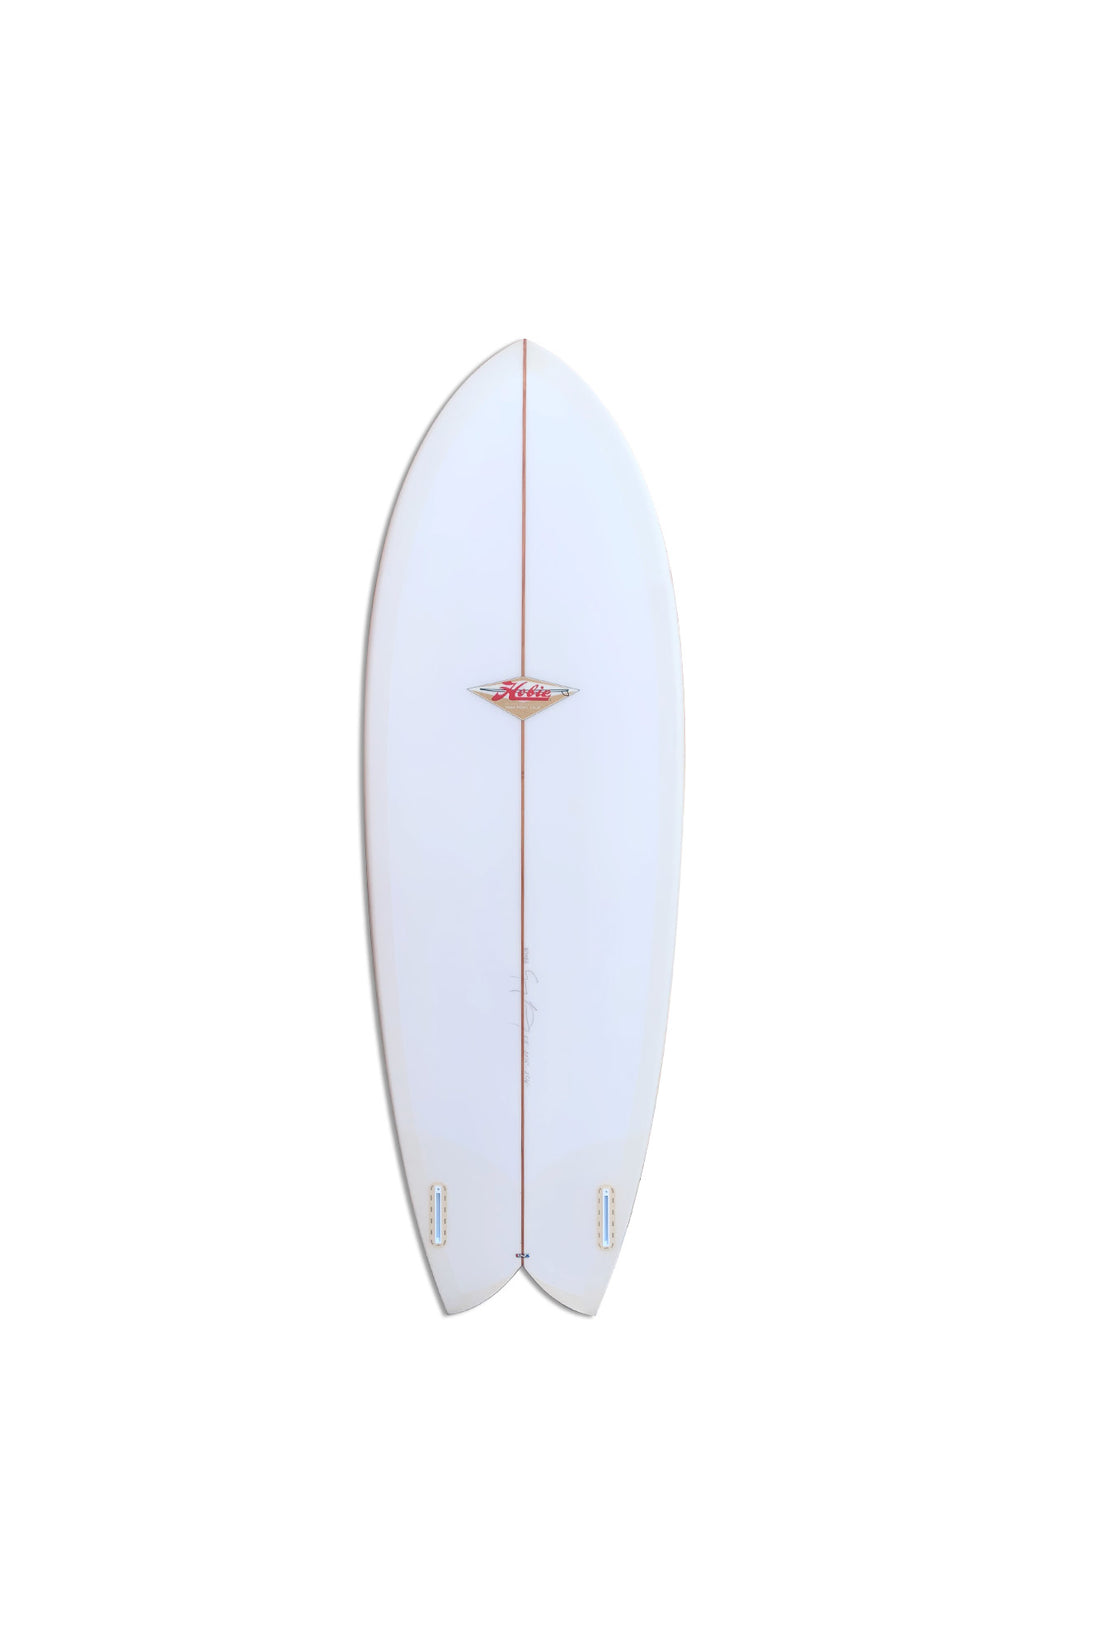 5'8 HOBIE CIRCA FISH - WHITE/DETAIL SURFBOARD HOBIE   